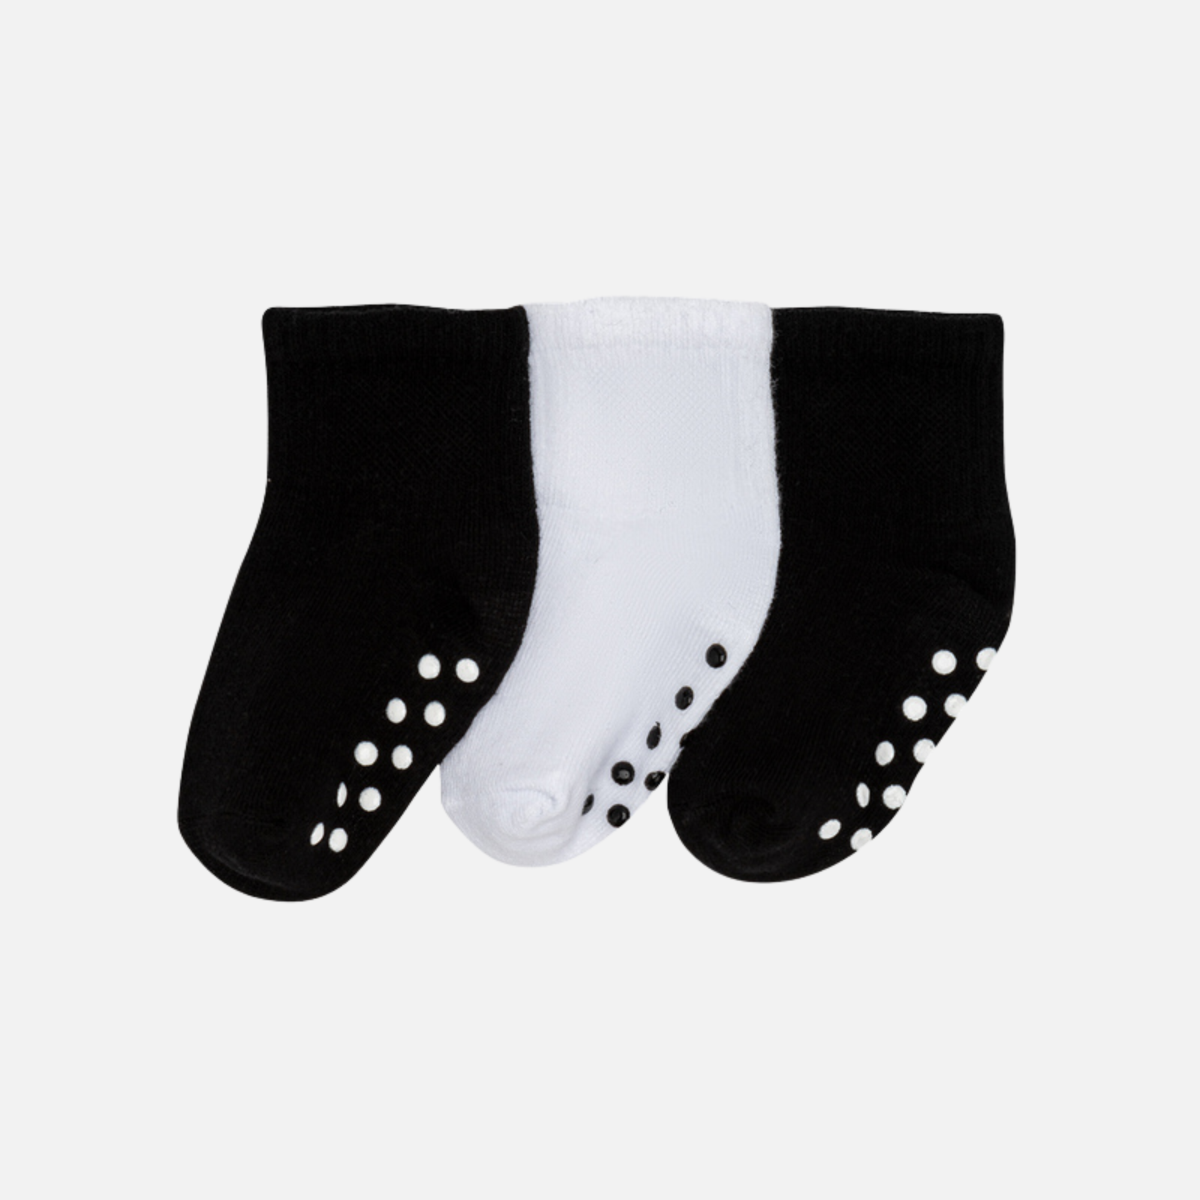 Calzini Nike Sportswear per neonati, confezione da 3 - neri/bianchi